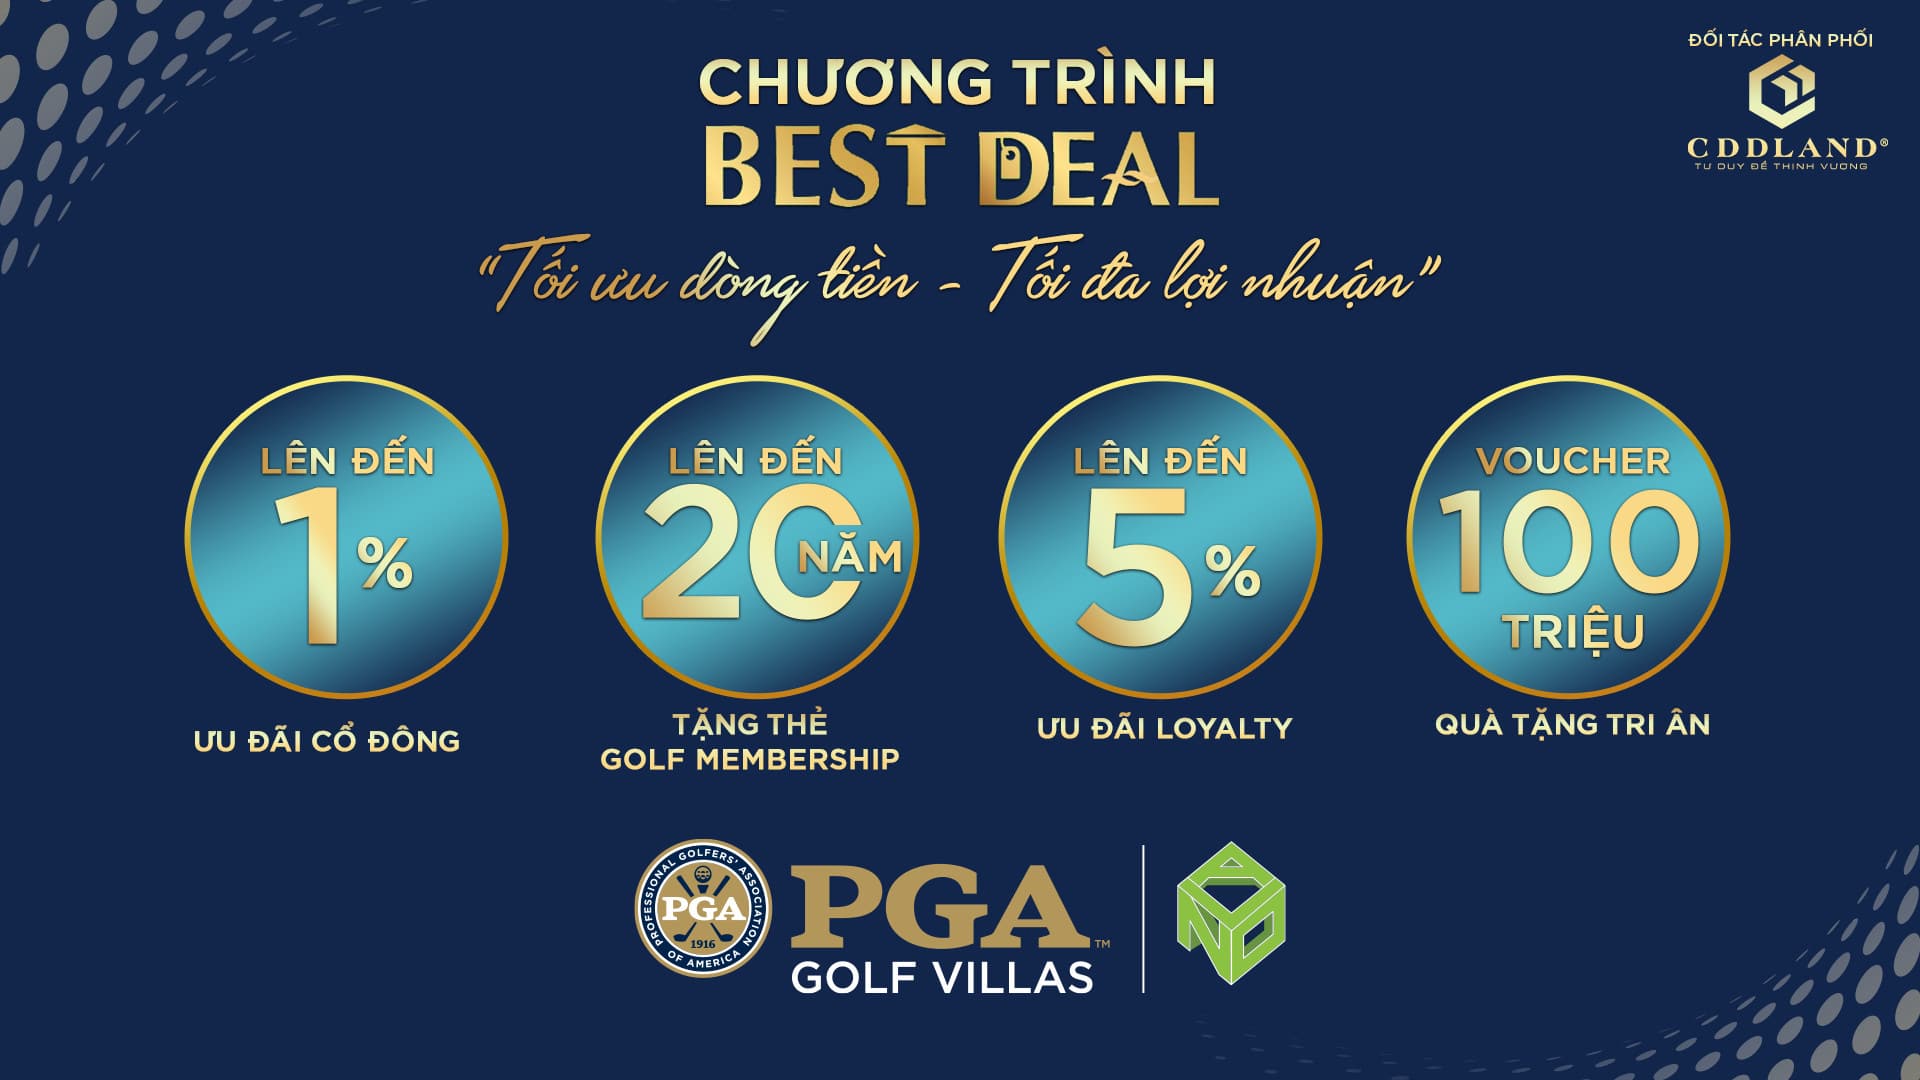 best deal pga golf villas